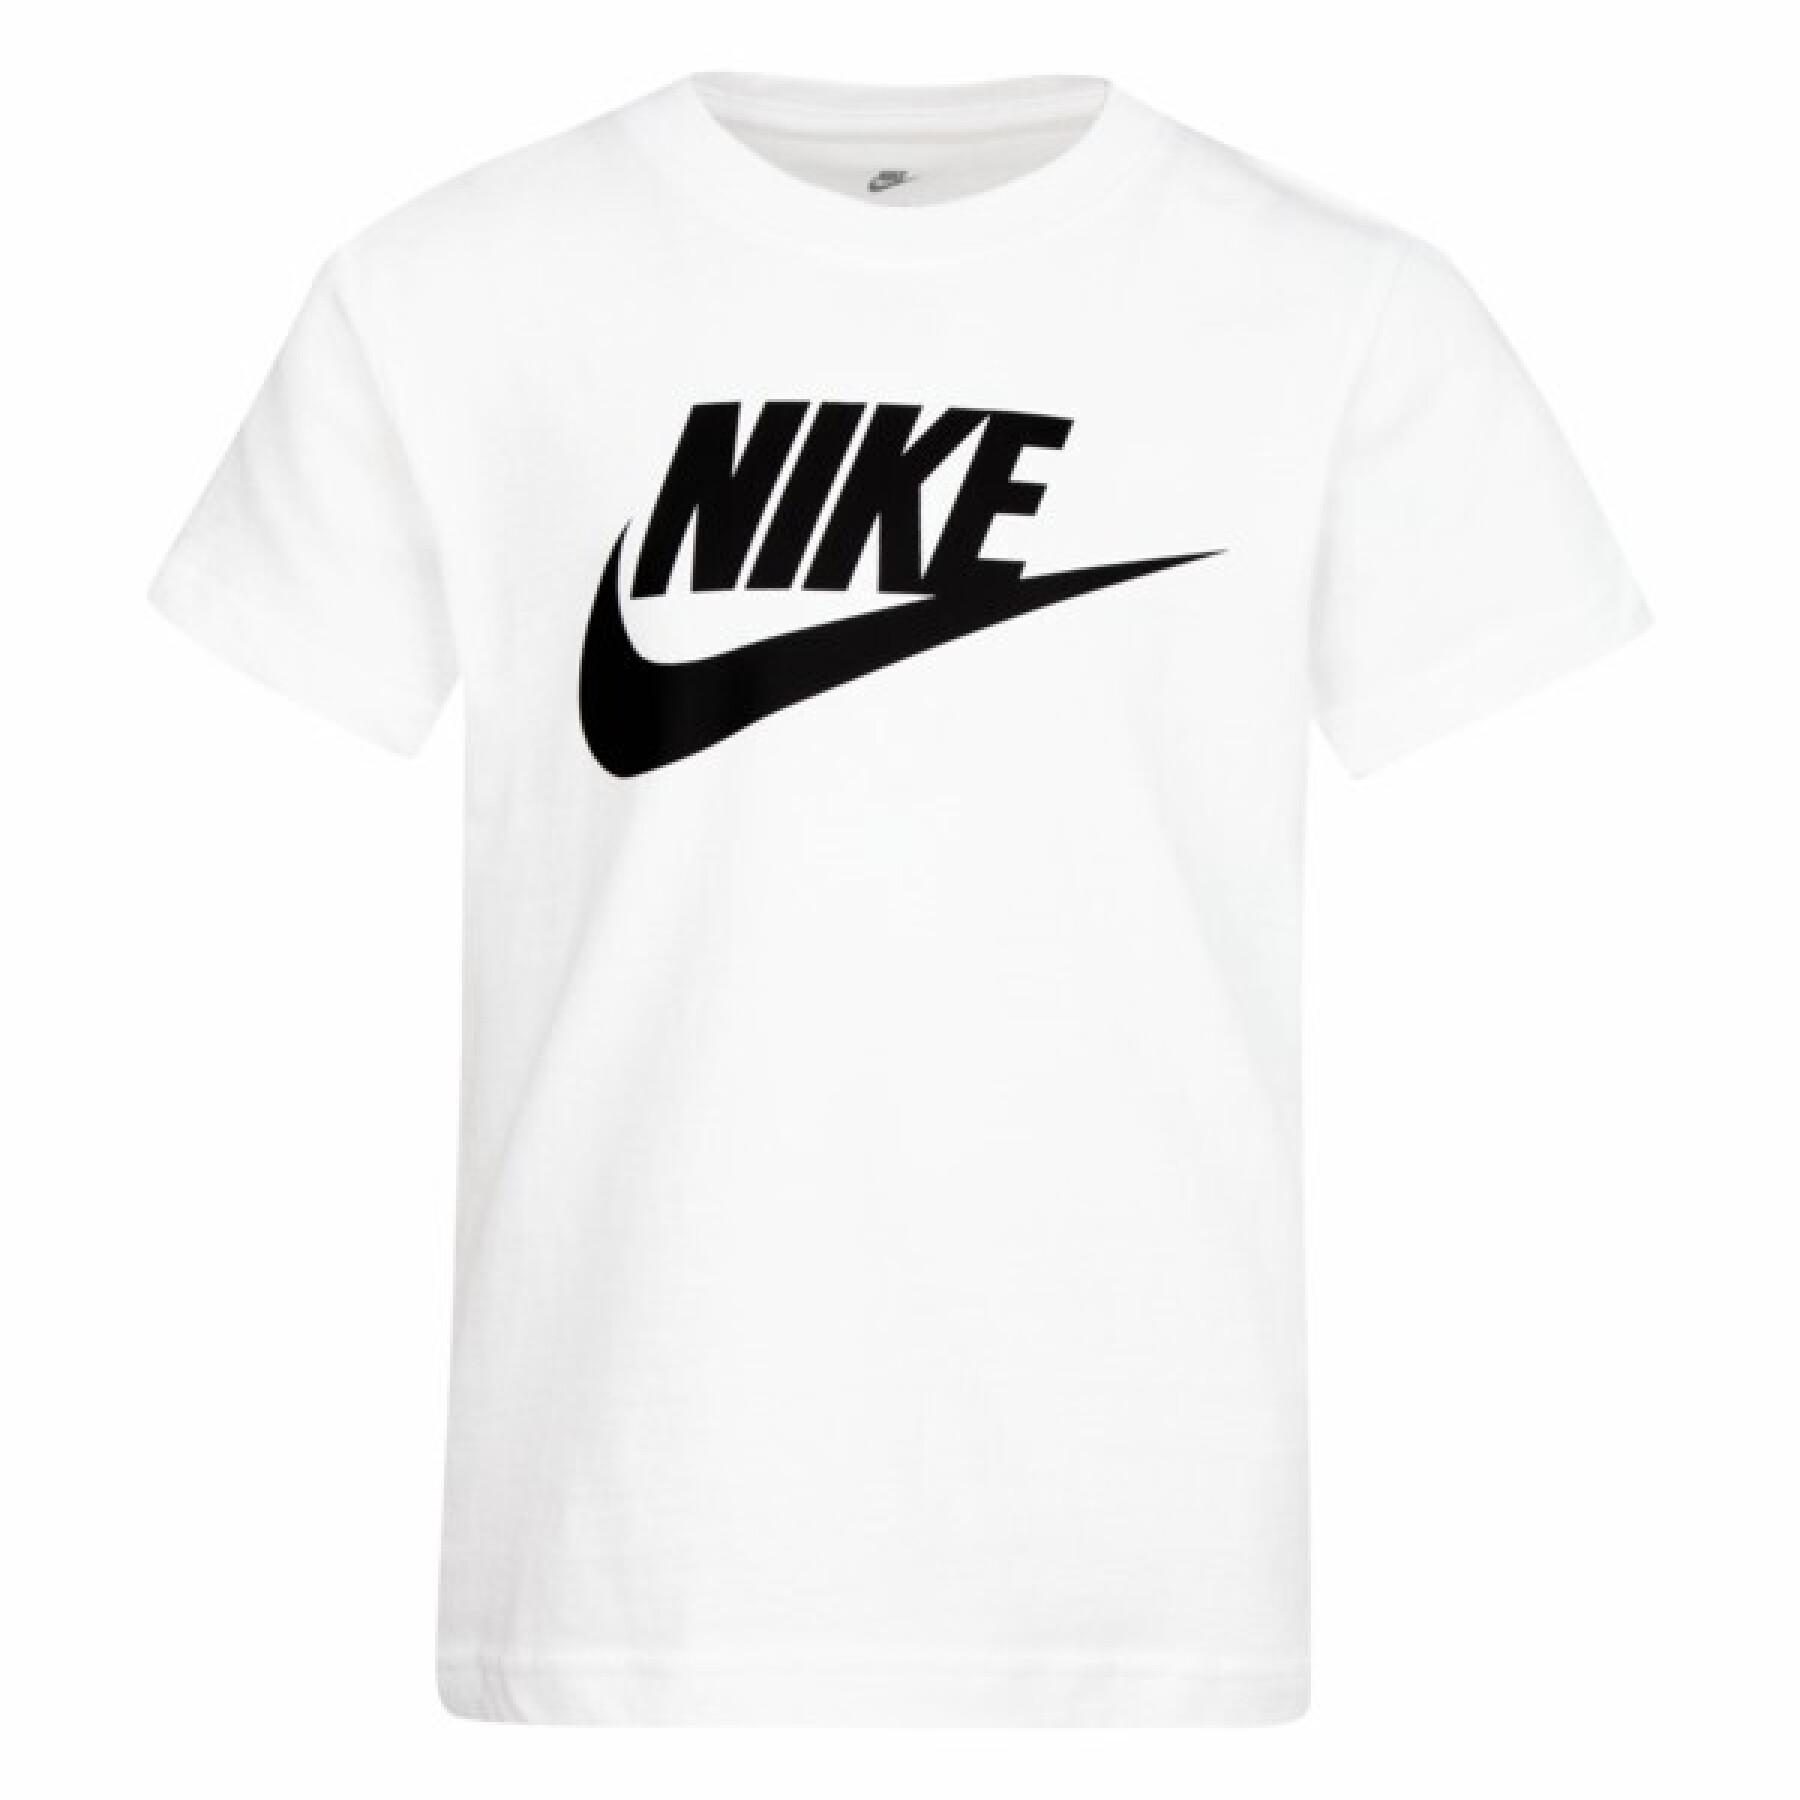 Kinder-T-shirt Nike Futura